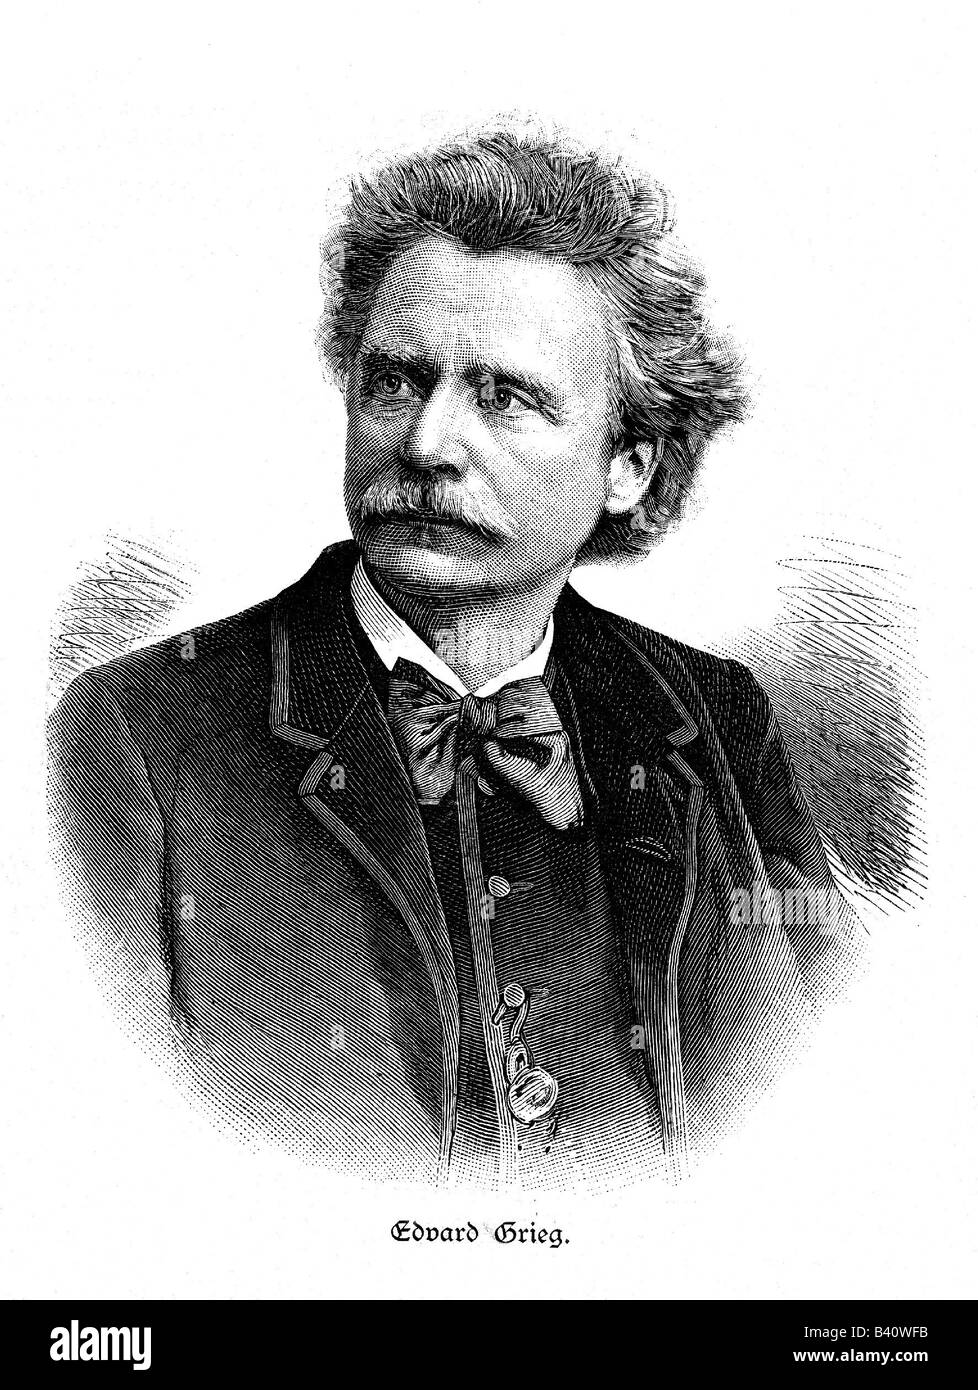 Grieg, Edvard, 15.6.1843 - 4.9.1907, Norwegian composer, portrait, original xylographie, 1882, Stock Photo